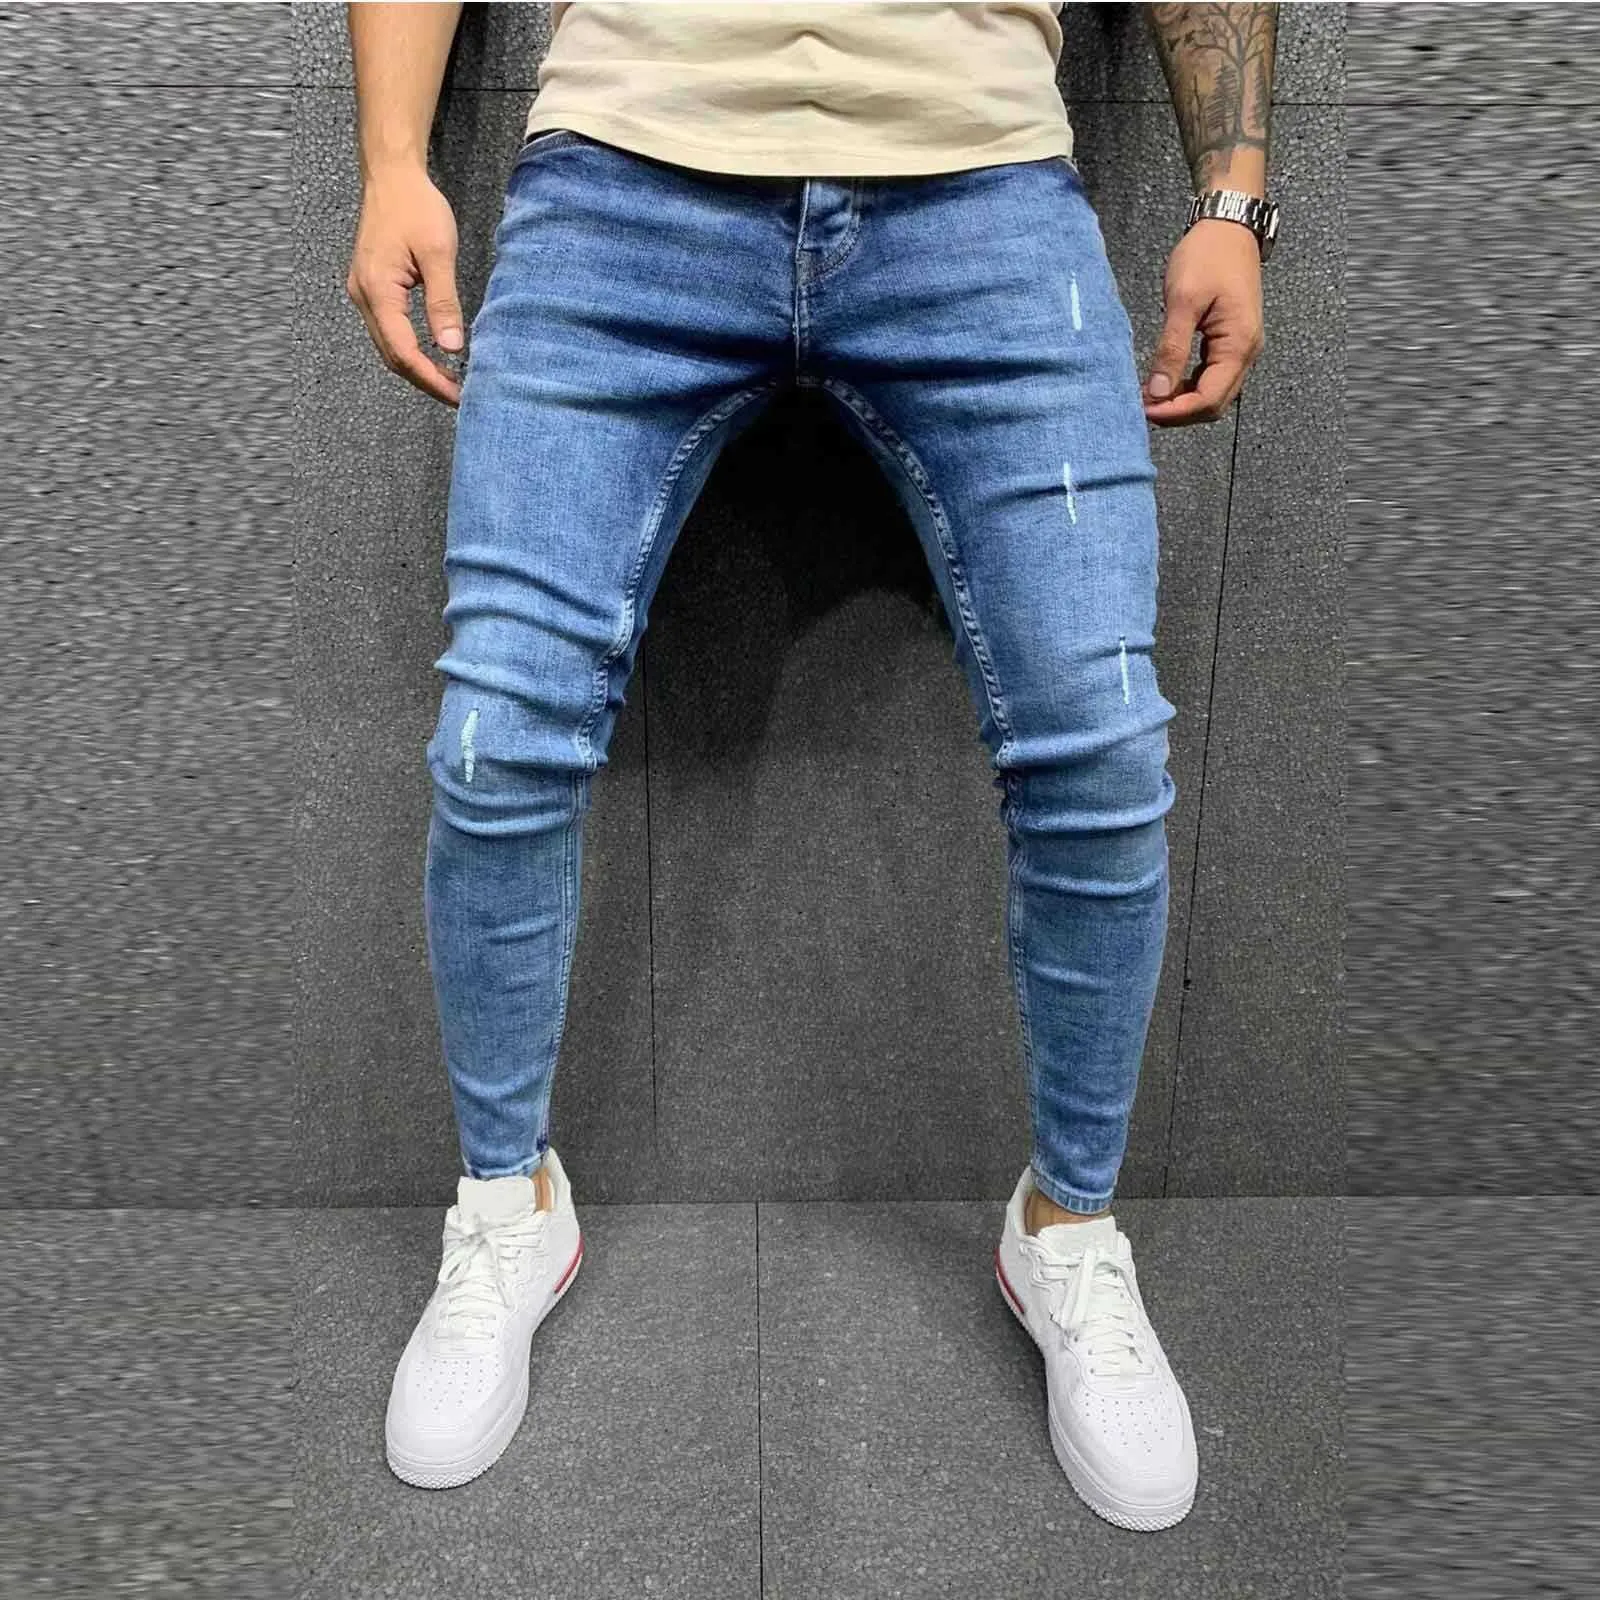 Fashion Men Zipper Denim Long Pant Hole Ripped Vintage Solid Colors Hip Hop Stretch High Waist Skinny Jeans Pants Trousers#35 X0621